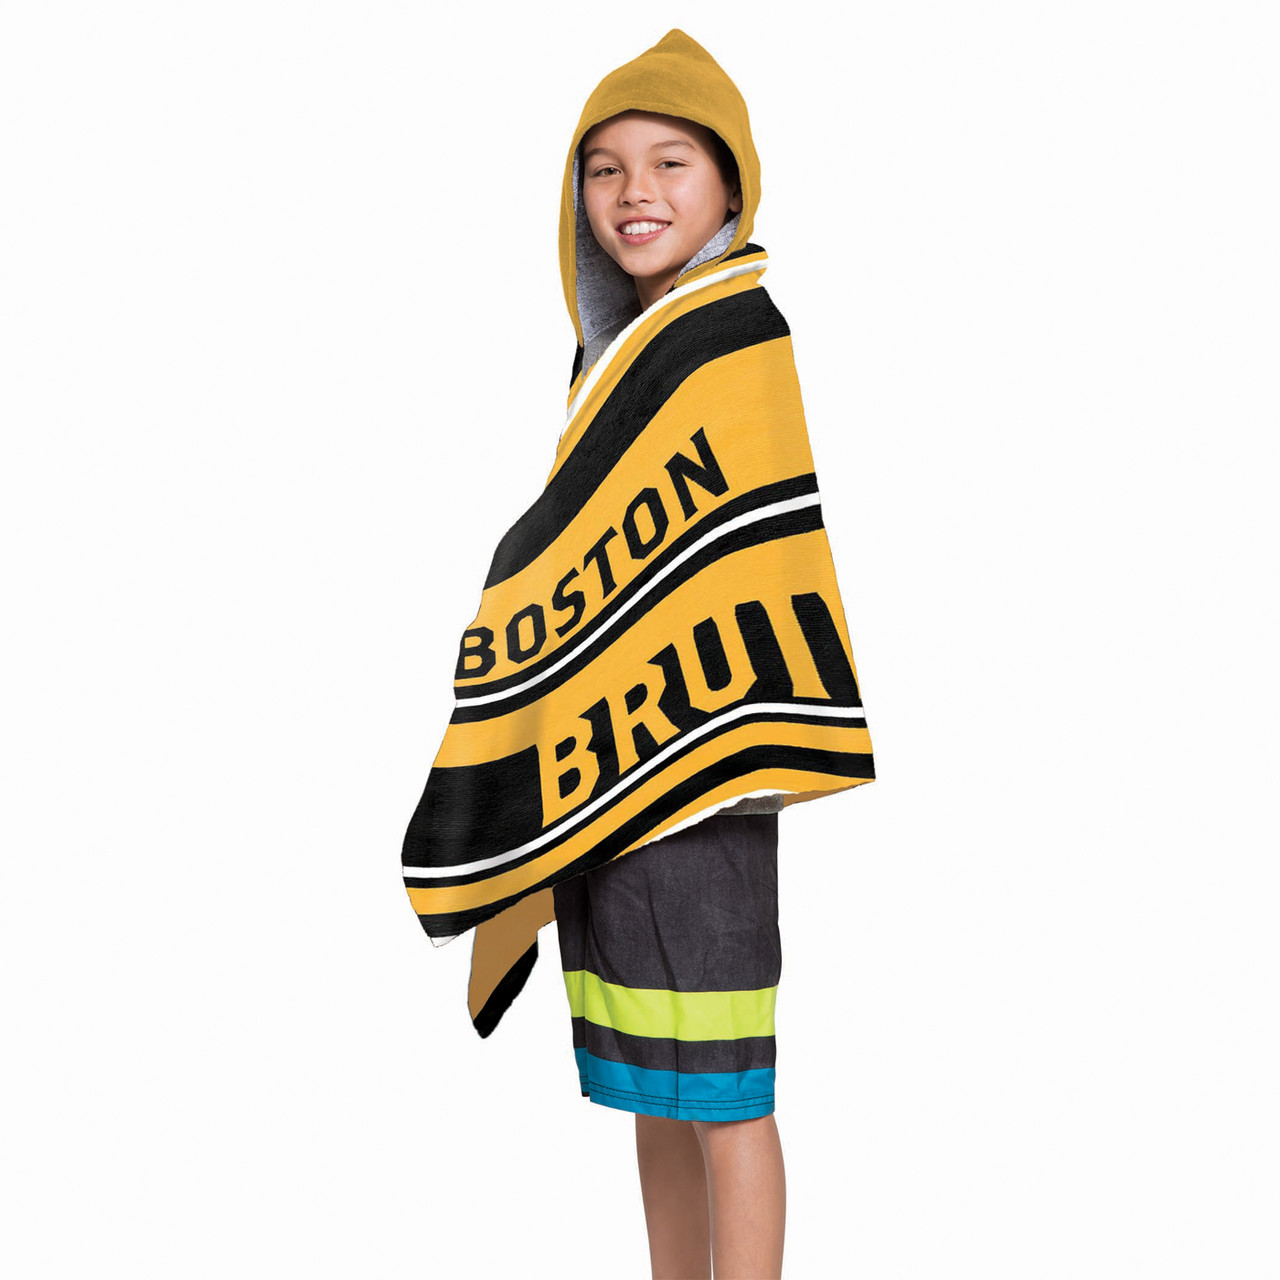 Boston Bruins Hooded Youth Beach Towel